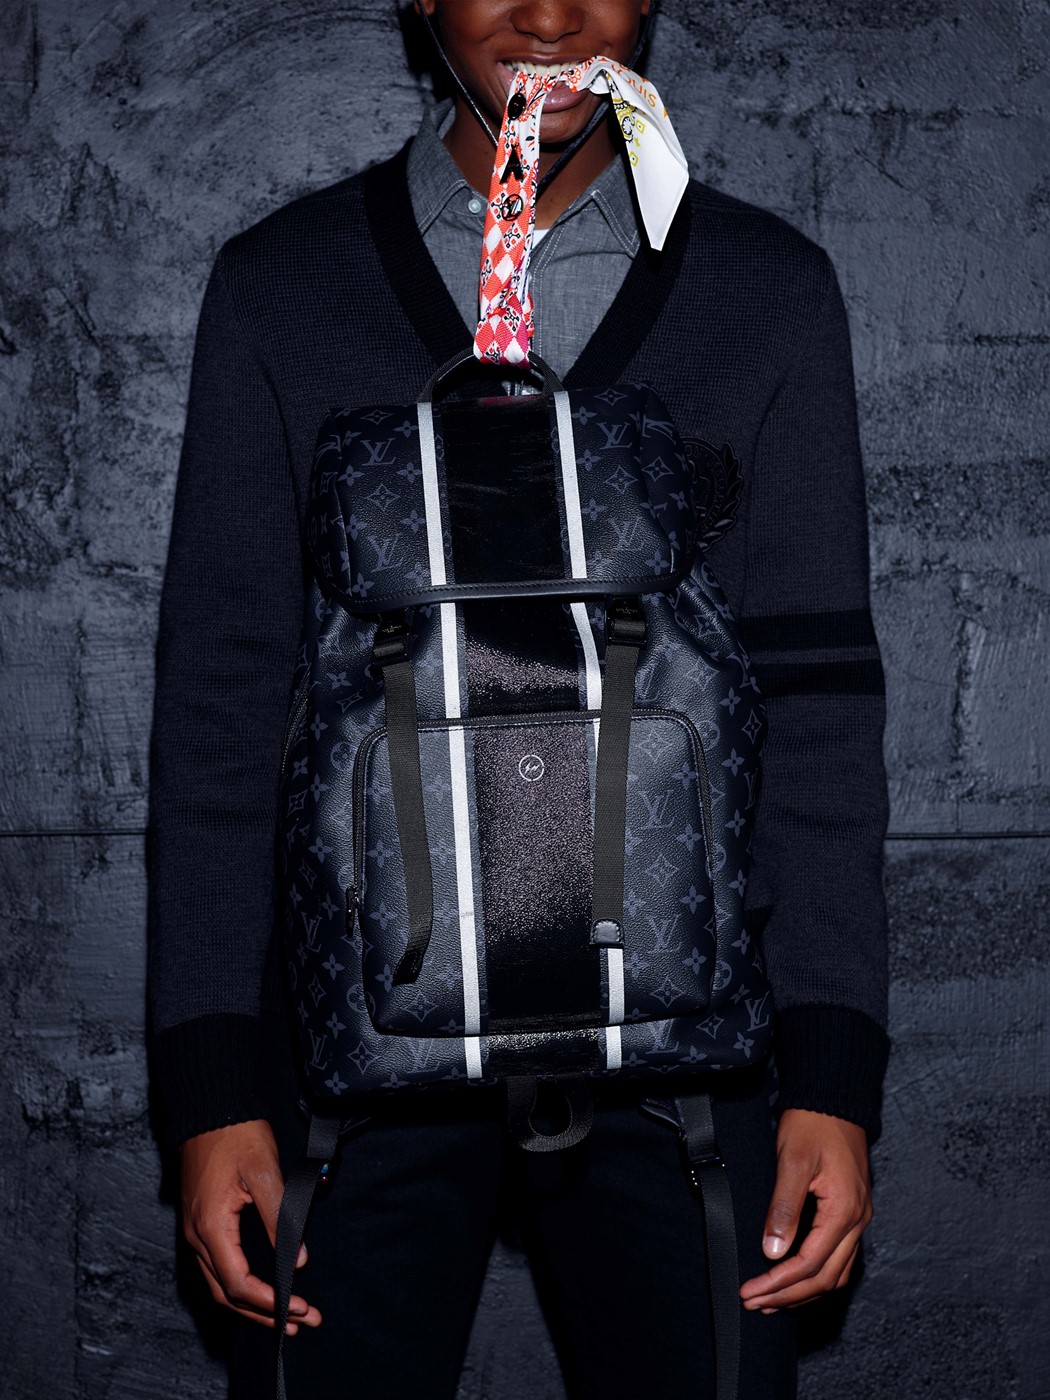 Louis Vuitton Fragment Black Eclipse Monogram Zack Backpack